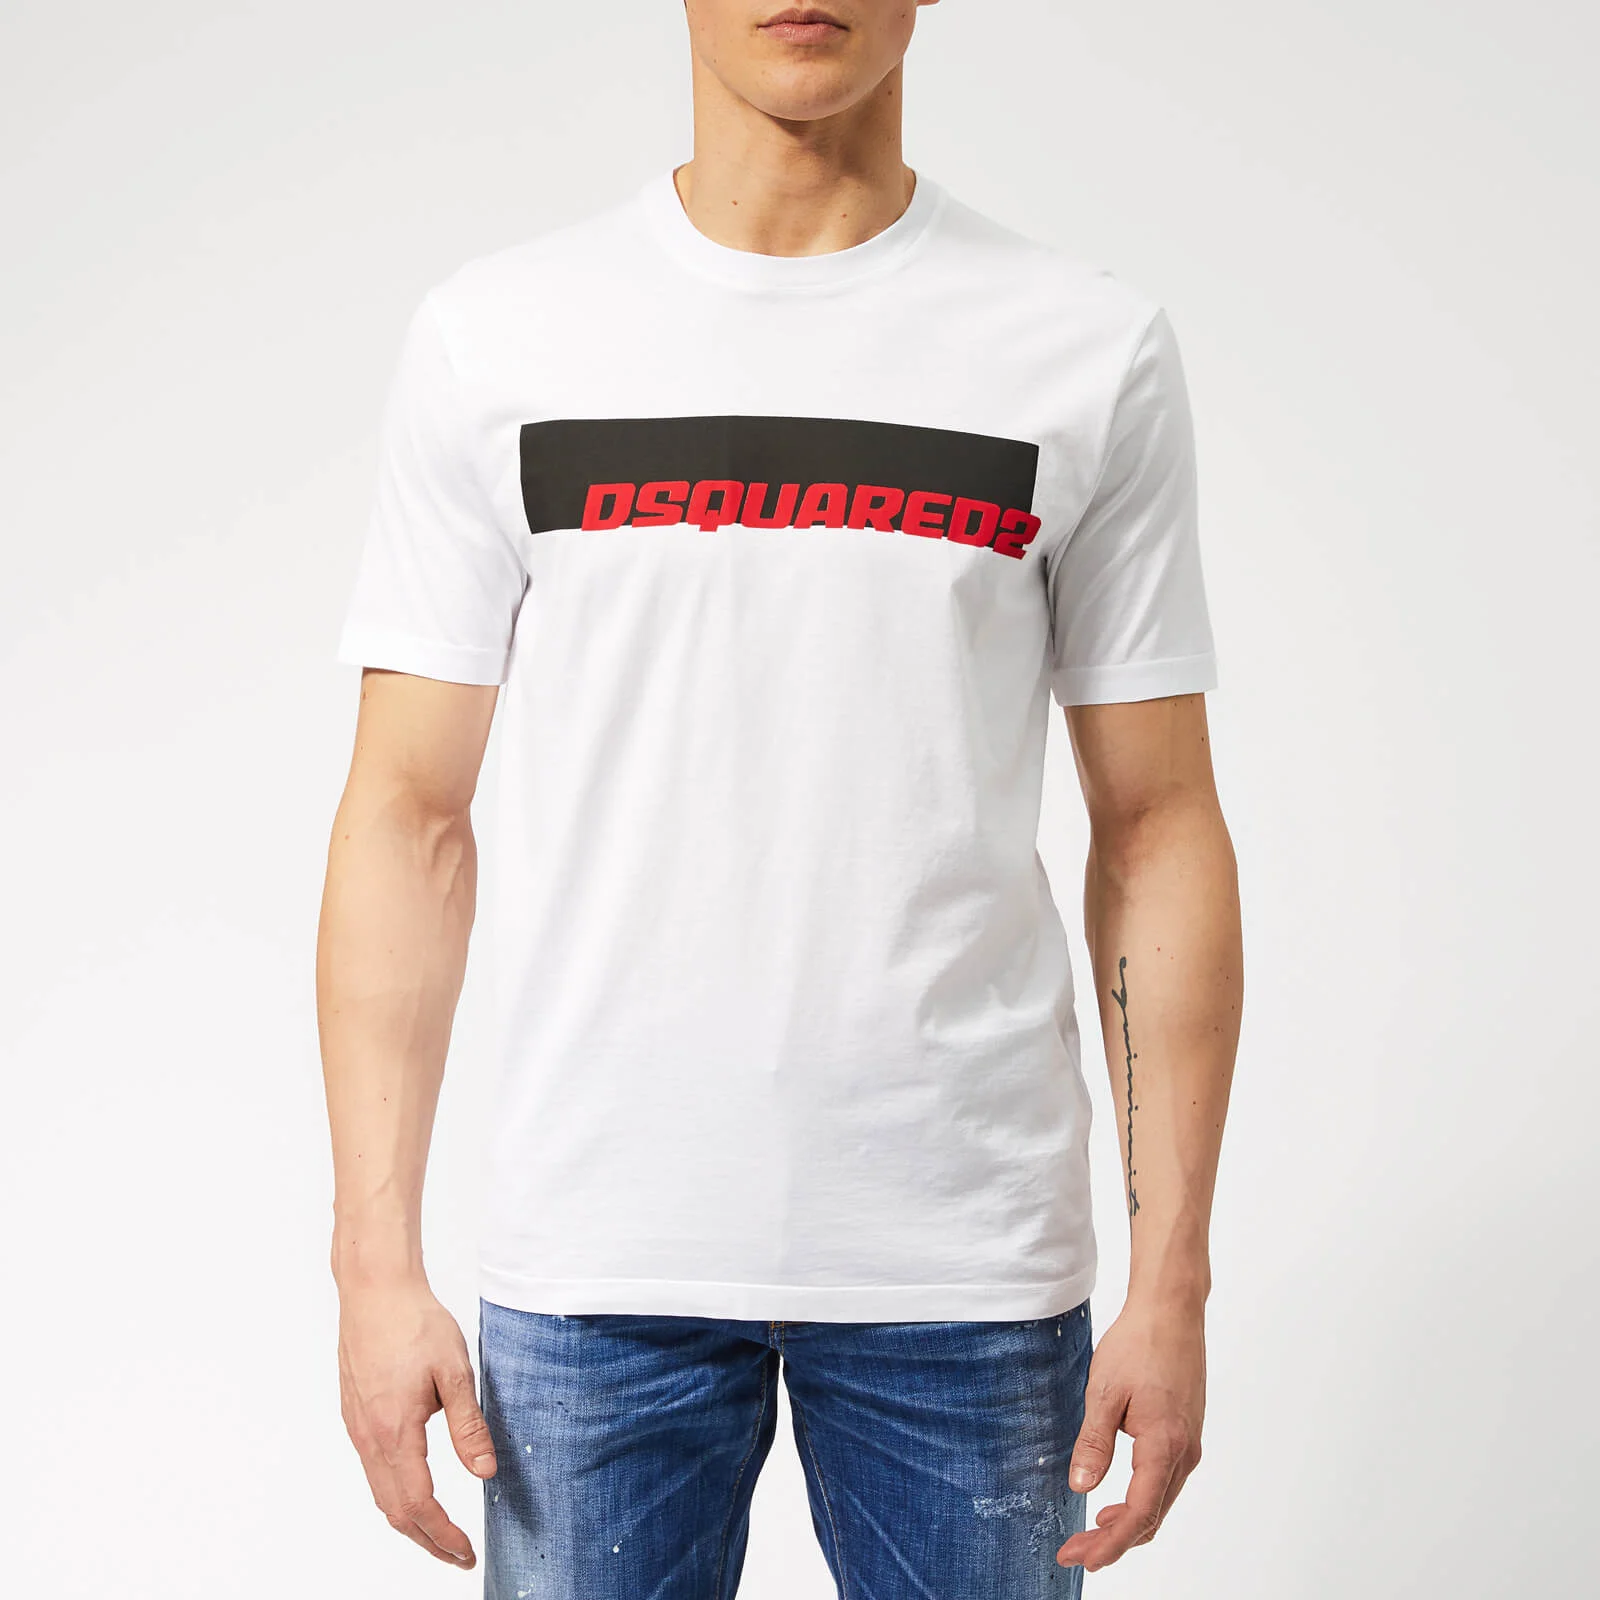 Dsquared2 Men's Stud Fit T-Shirt - White Image 1